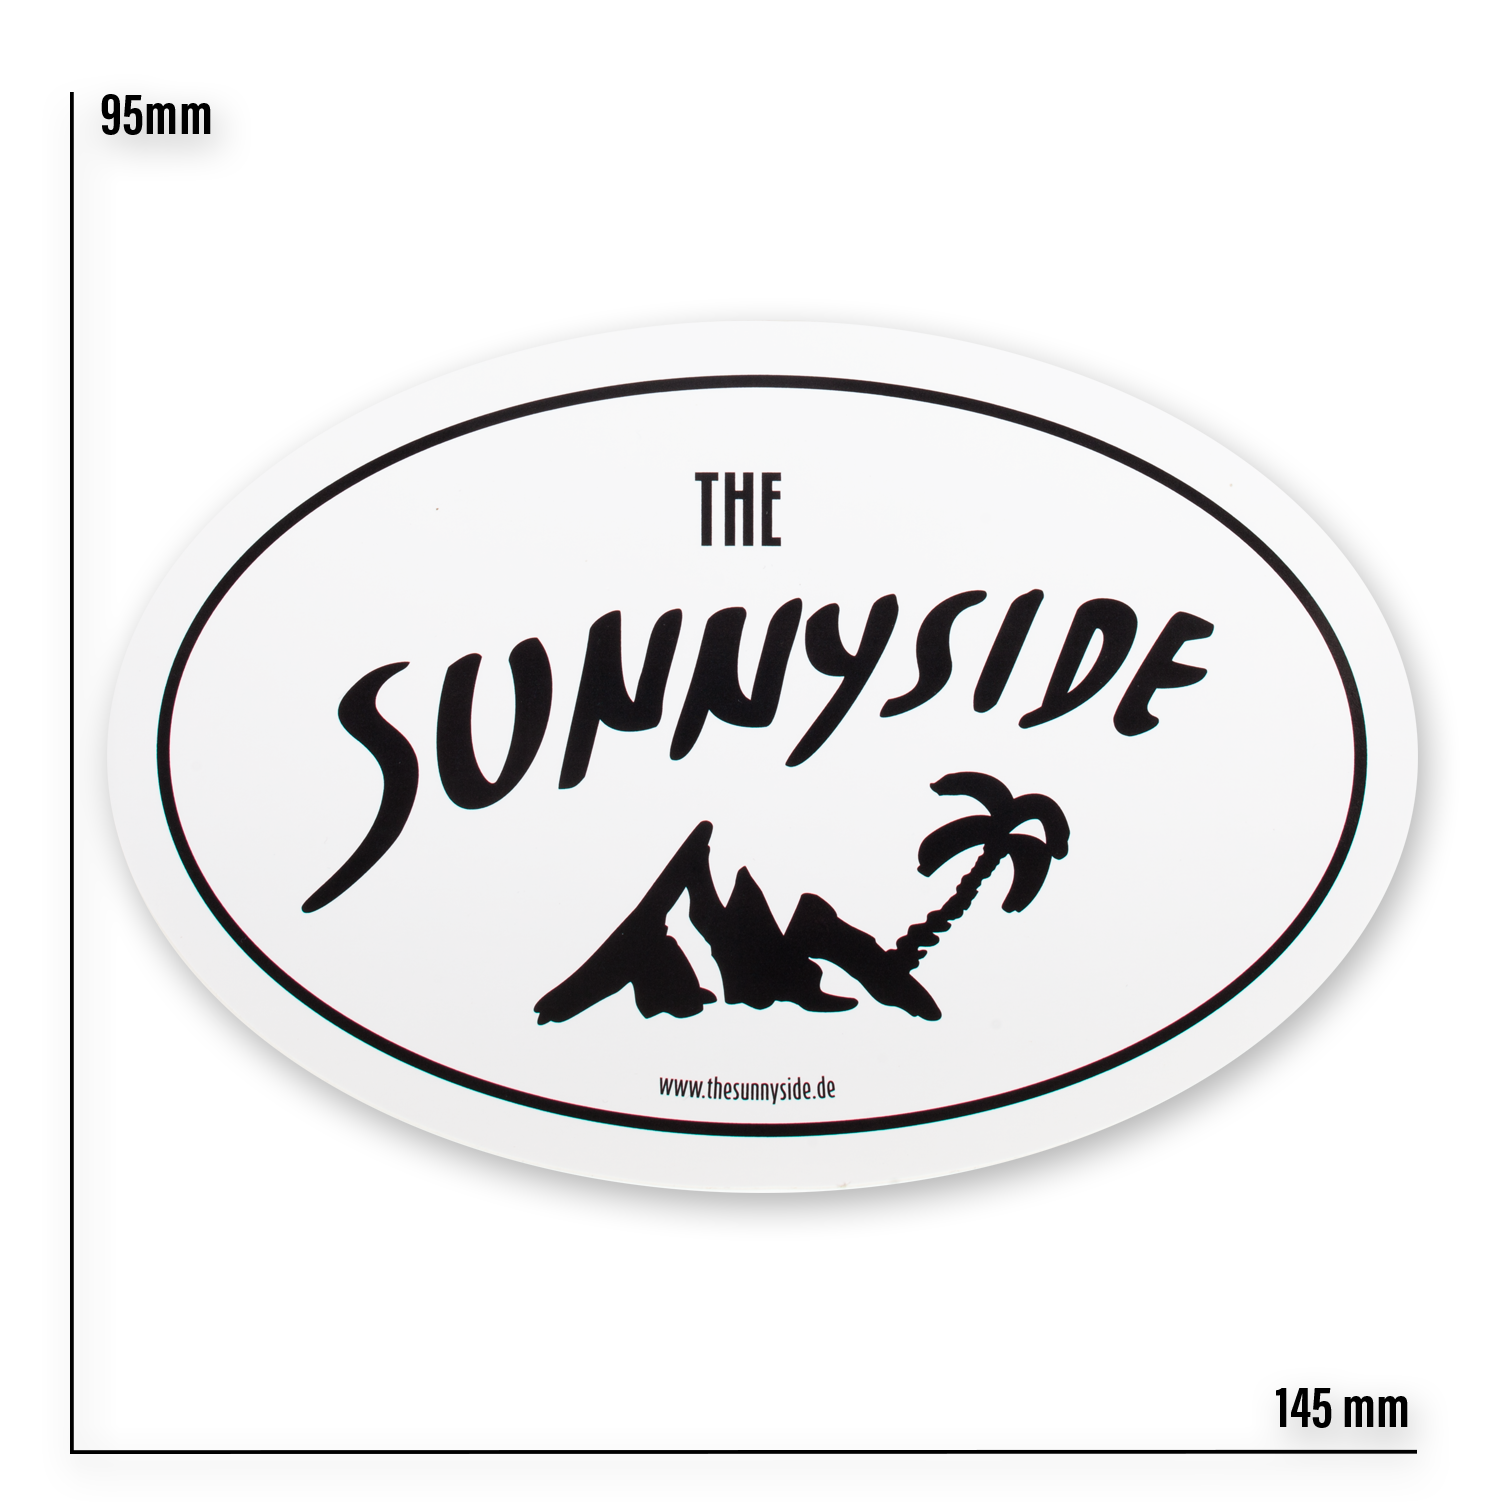 The Sunnyside als Laenderkennung - THE SUNNYSIDE